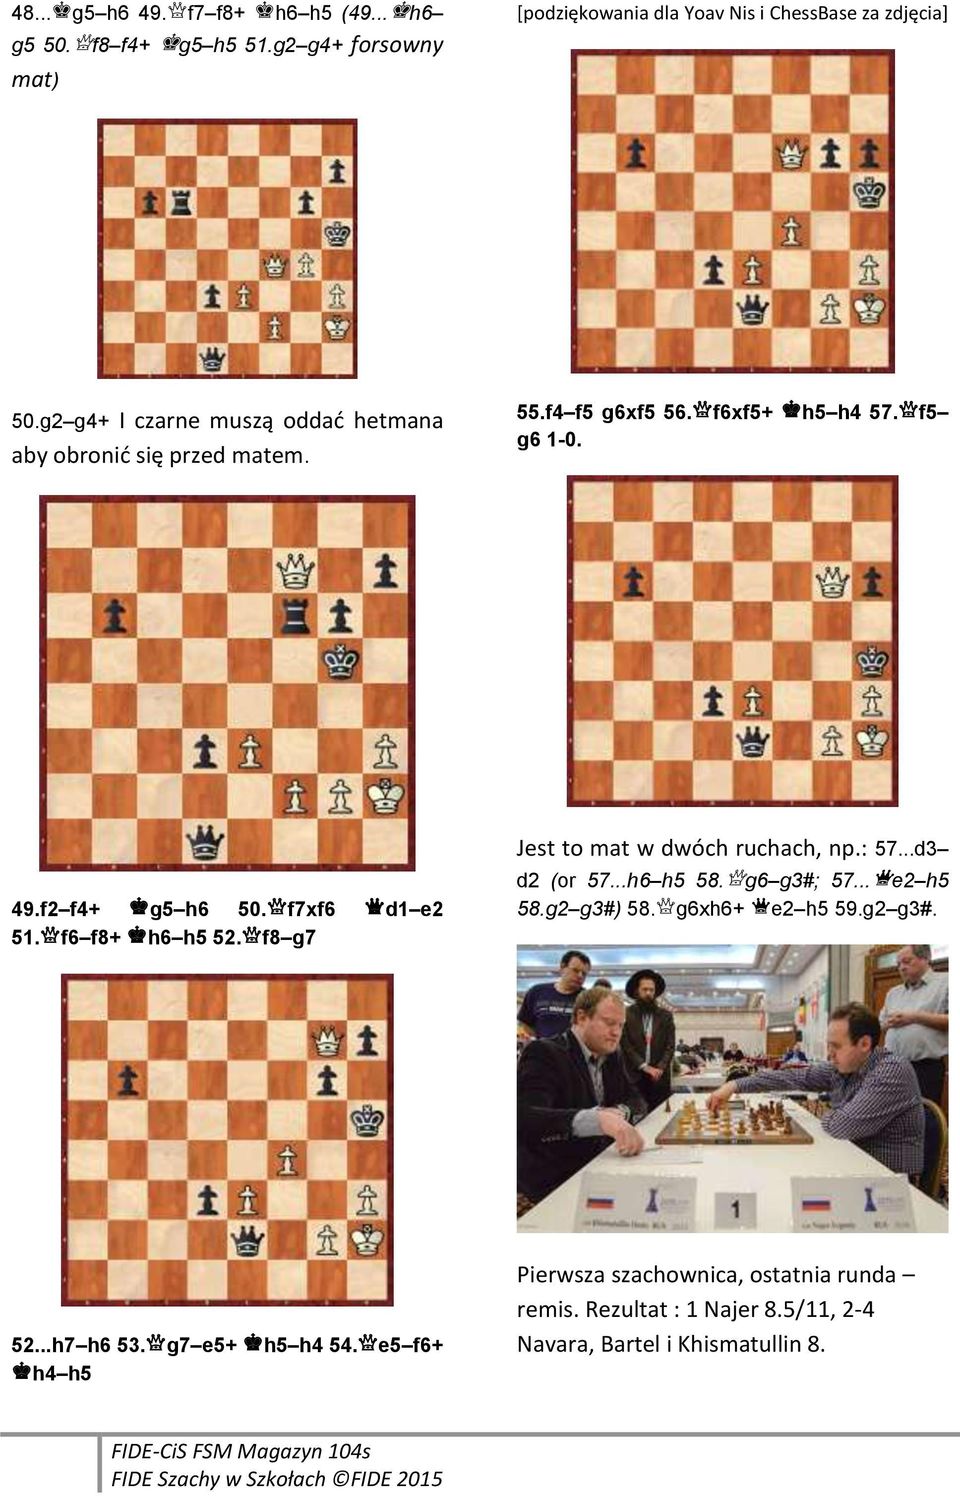 qf7xf6 wd1 e2 51.qf6 f8+ lh6 h5 52.qf8 g7 Jest to mat w dwóch ruchach, np.: 57...d3 d2 (or 57...h6 h5 58.qg6 g3#; 57...we2 h5 58.g2 g3#) 58.